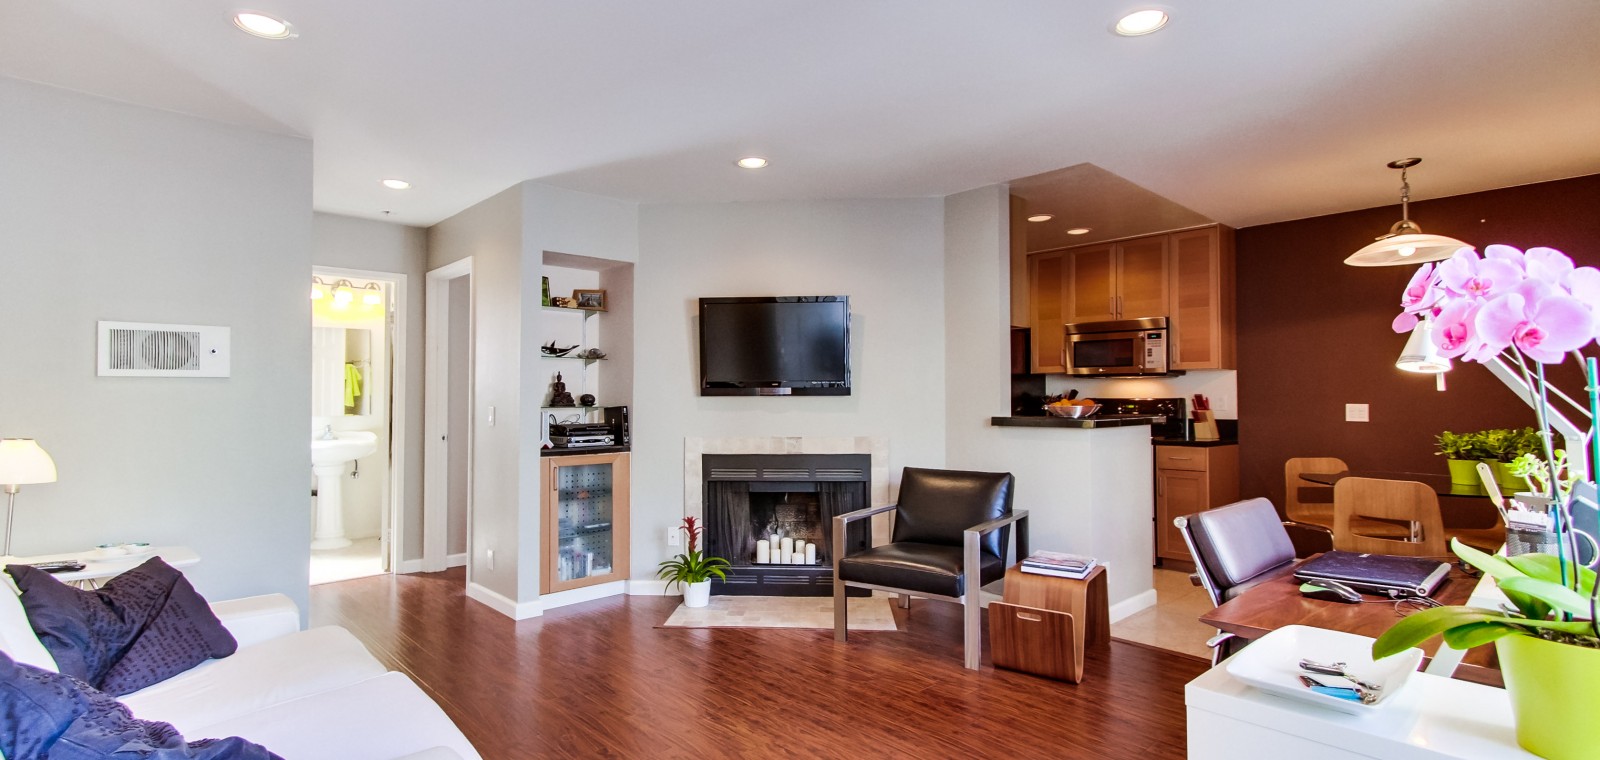 Bedroom - Blumenfeld Group | San Diego Real Estate